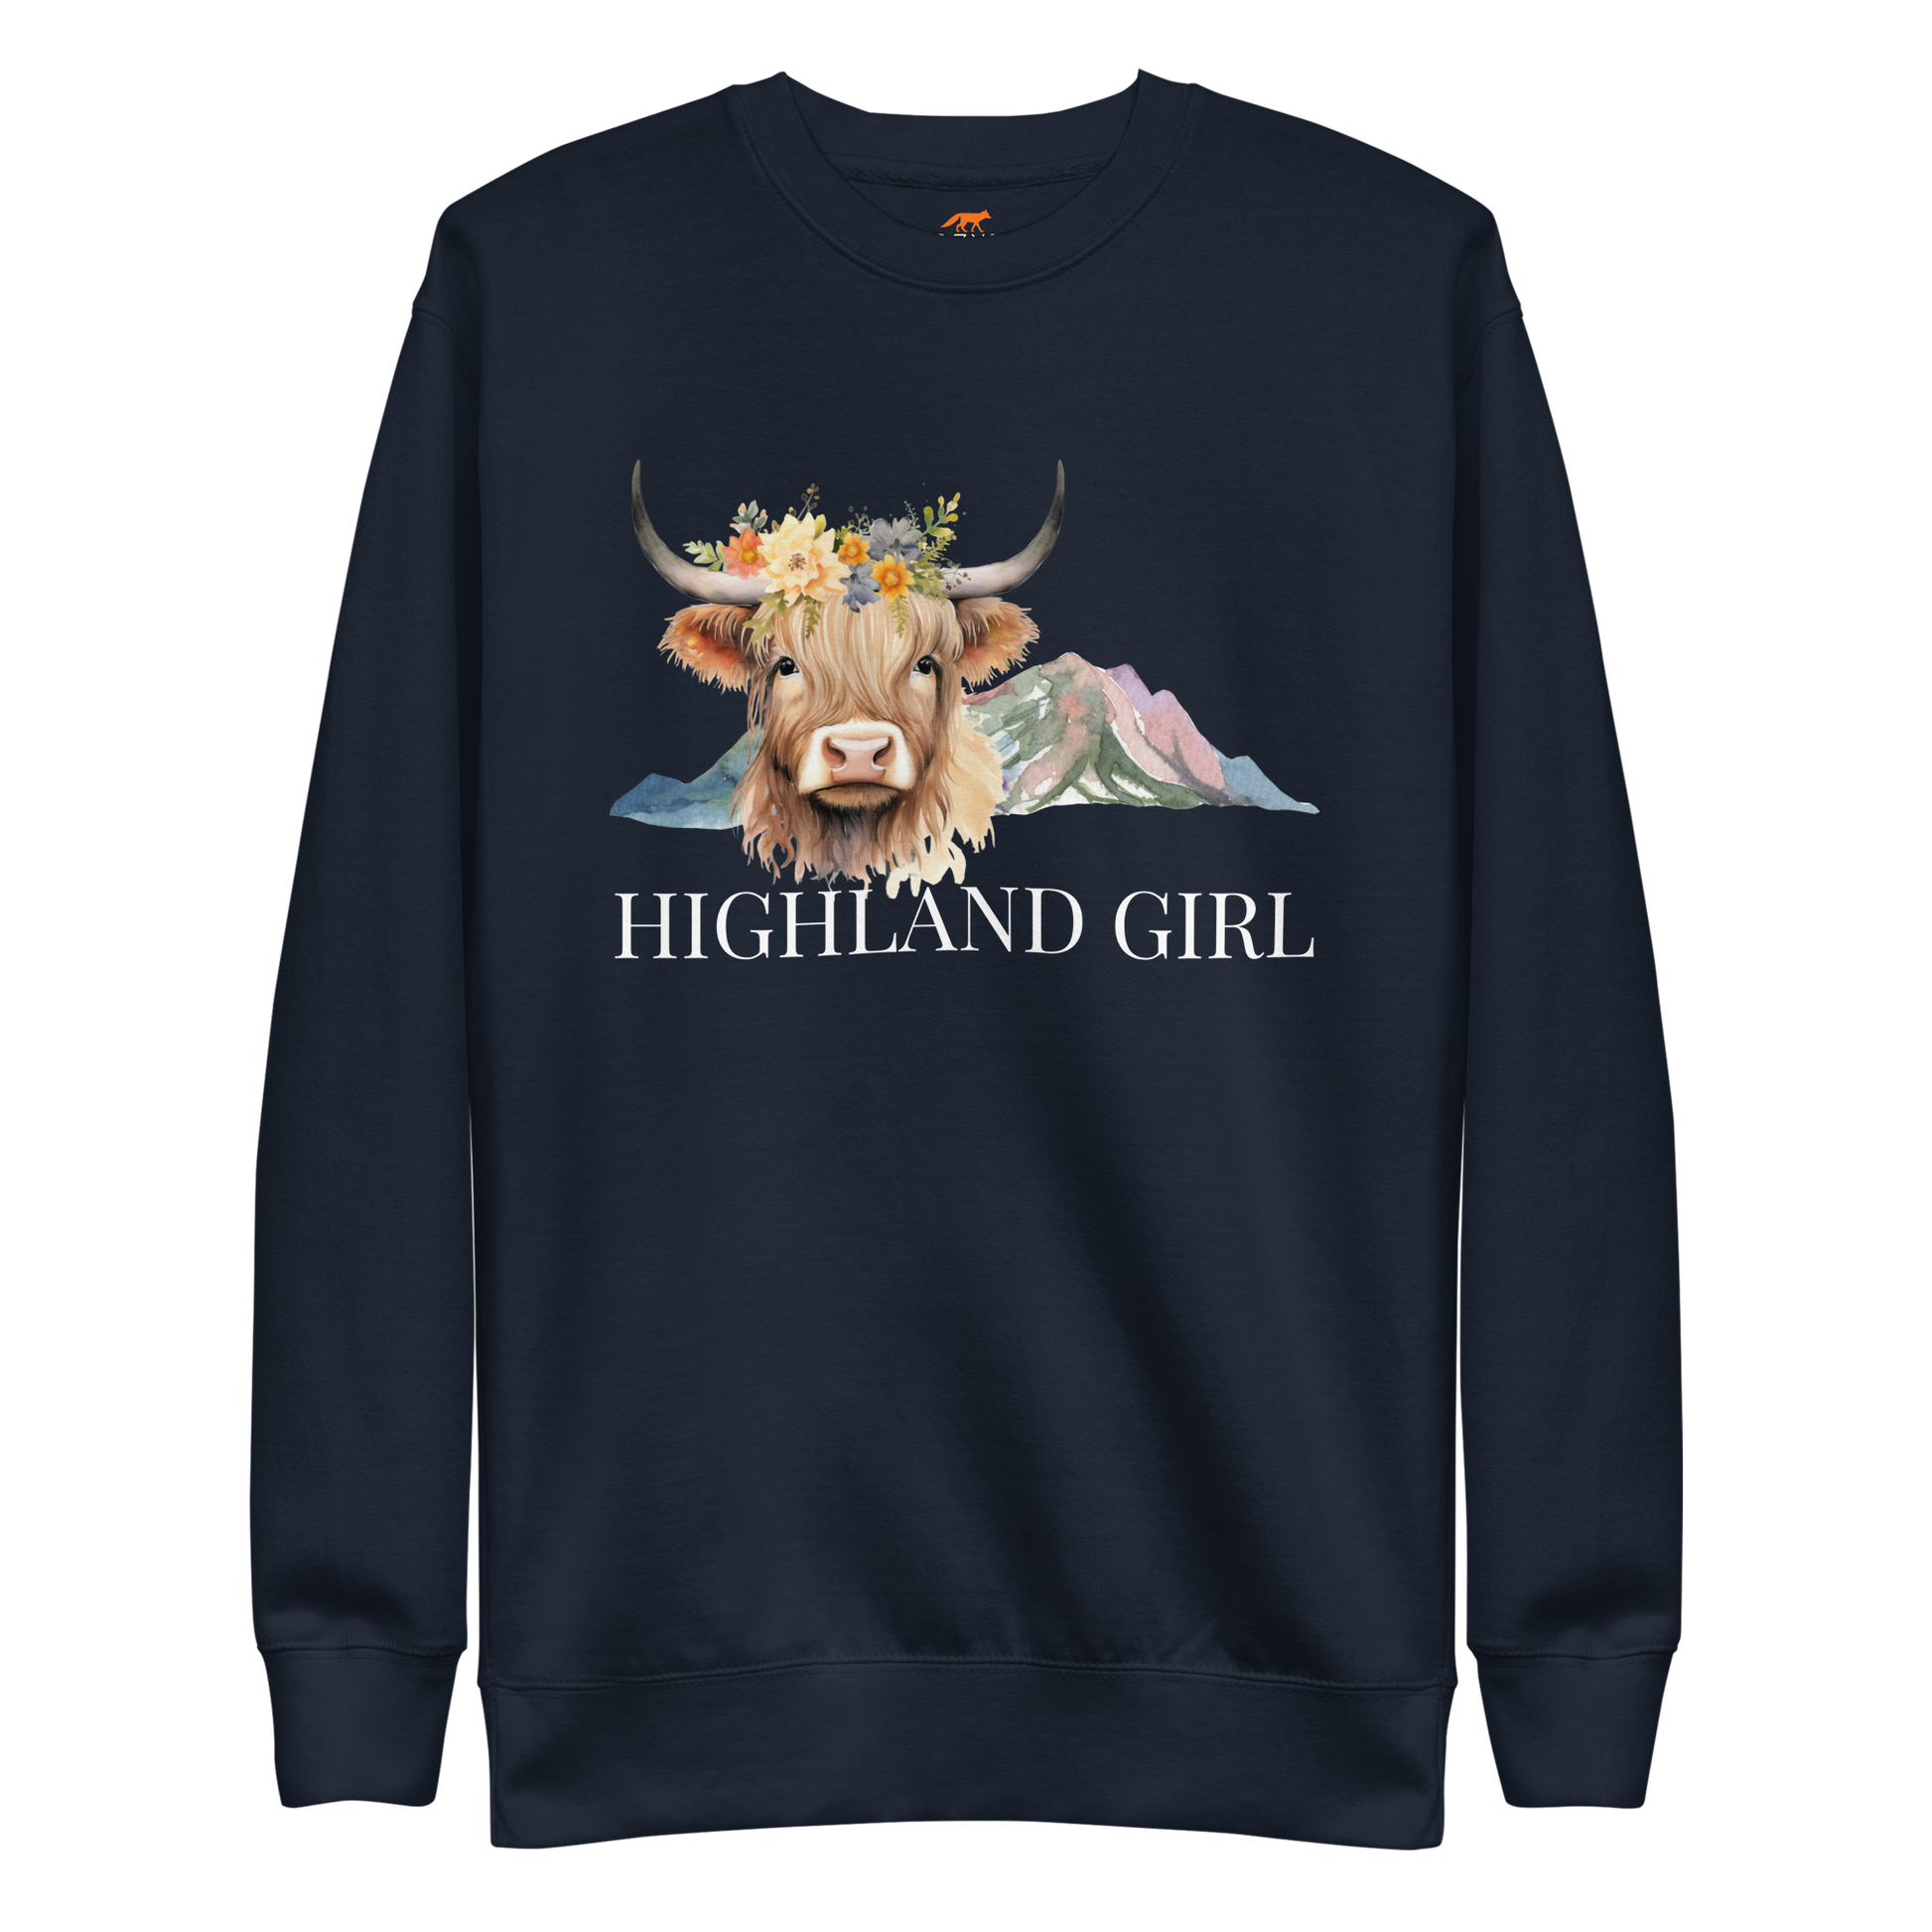 Navy Blazer Premium Highland Cow Sweatshirt featuring an adorable Highland Girl graphic on the chest - Cute Graphic Highland Cow Sweatshirts - Boozy Fox